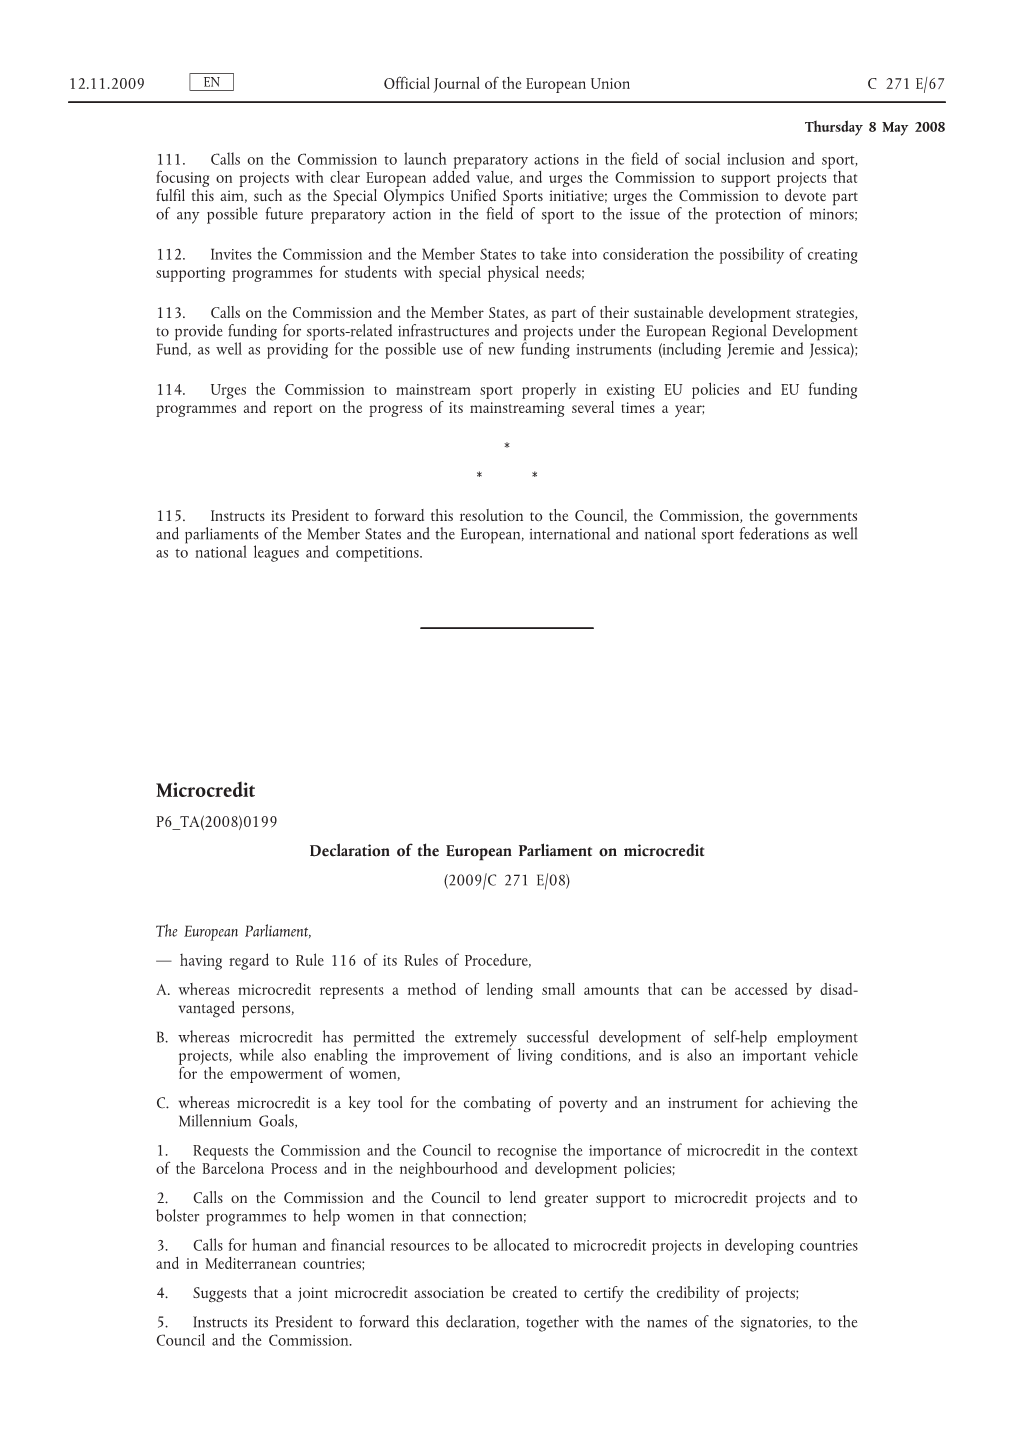 Microcredit P6 TA(2008)0199 Declaration of the European Parliament on Microcredit (2009/C 271 E/08)